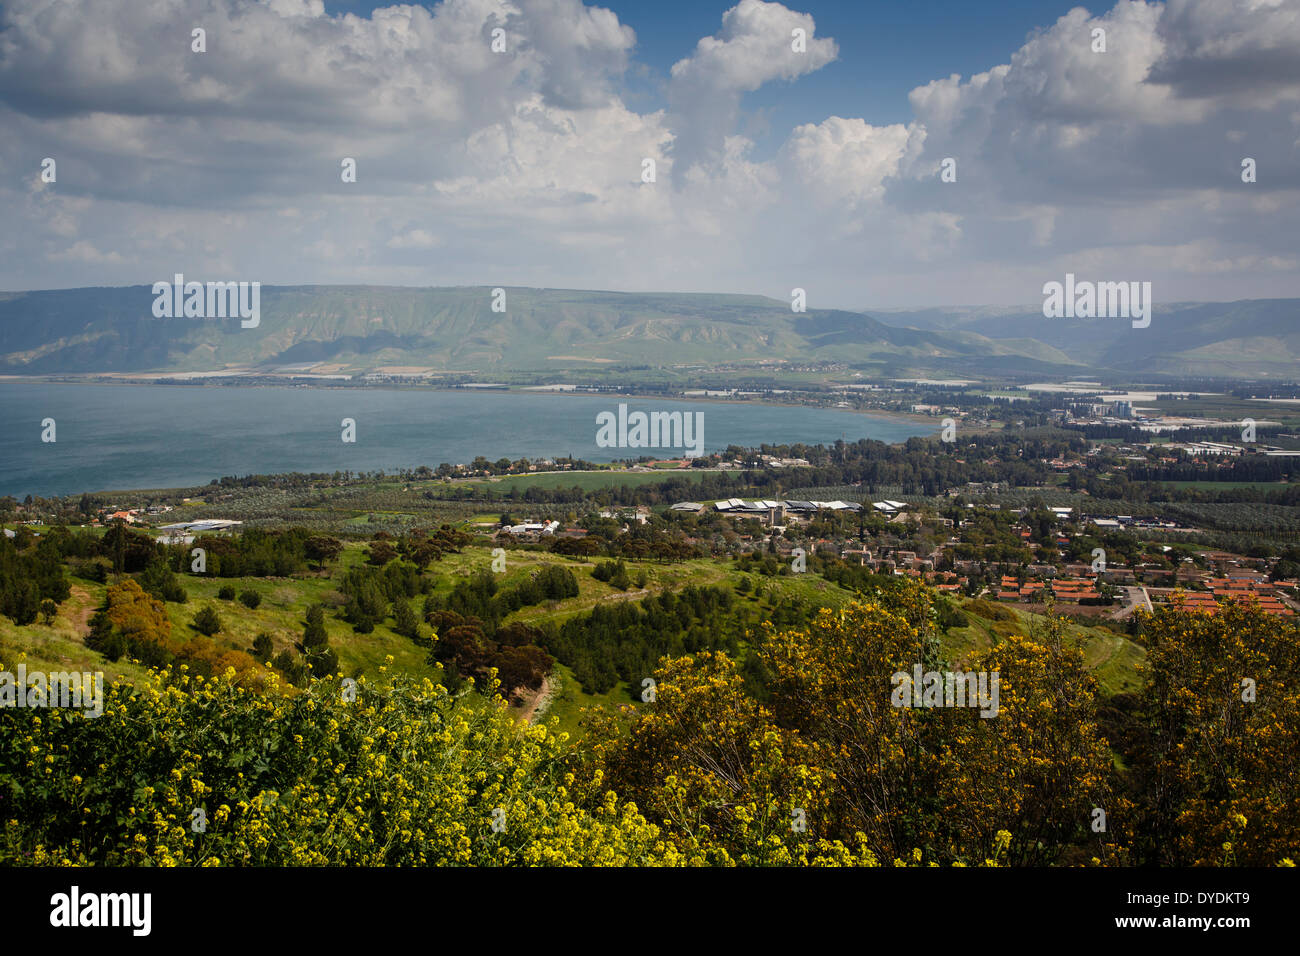 View over the Sea of Galilee - Lake Tiberias, Israel. Stock Photo